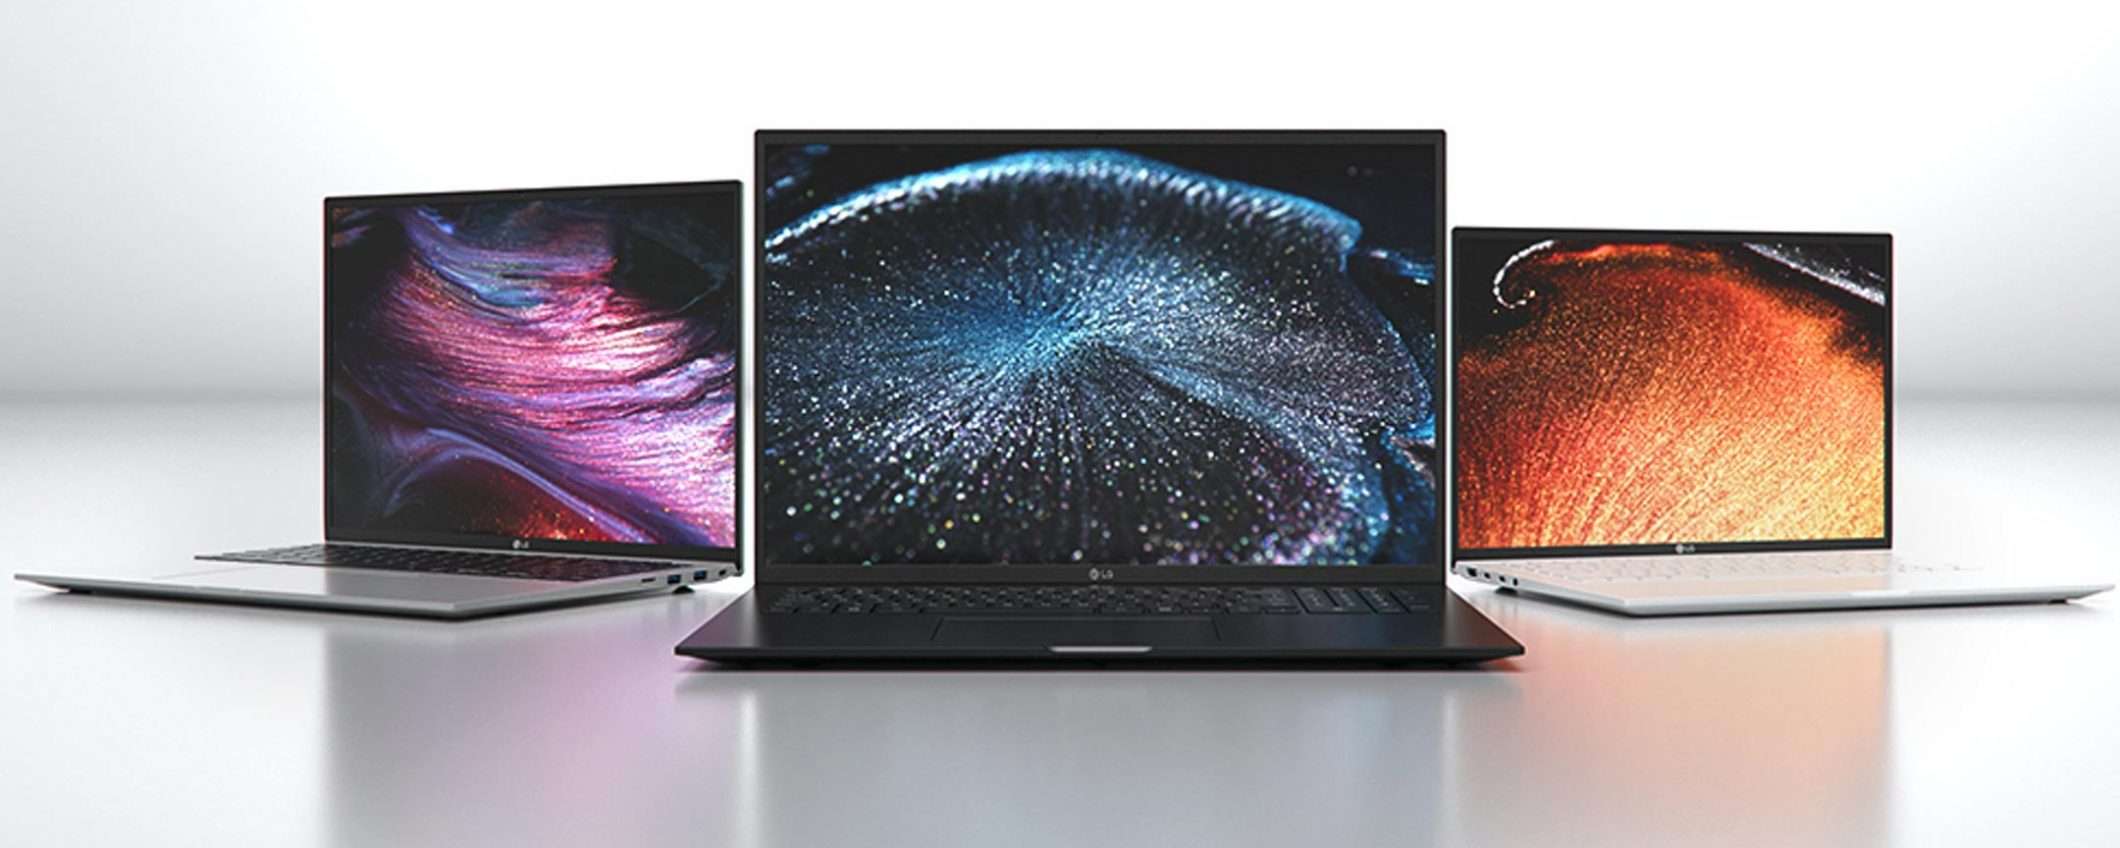 CES 2021: i nuovi laptop LG Gram con Tiger Lake